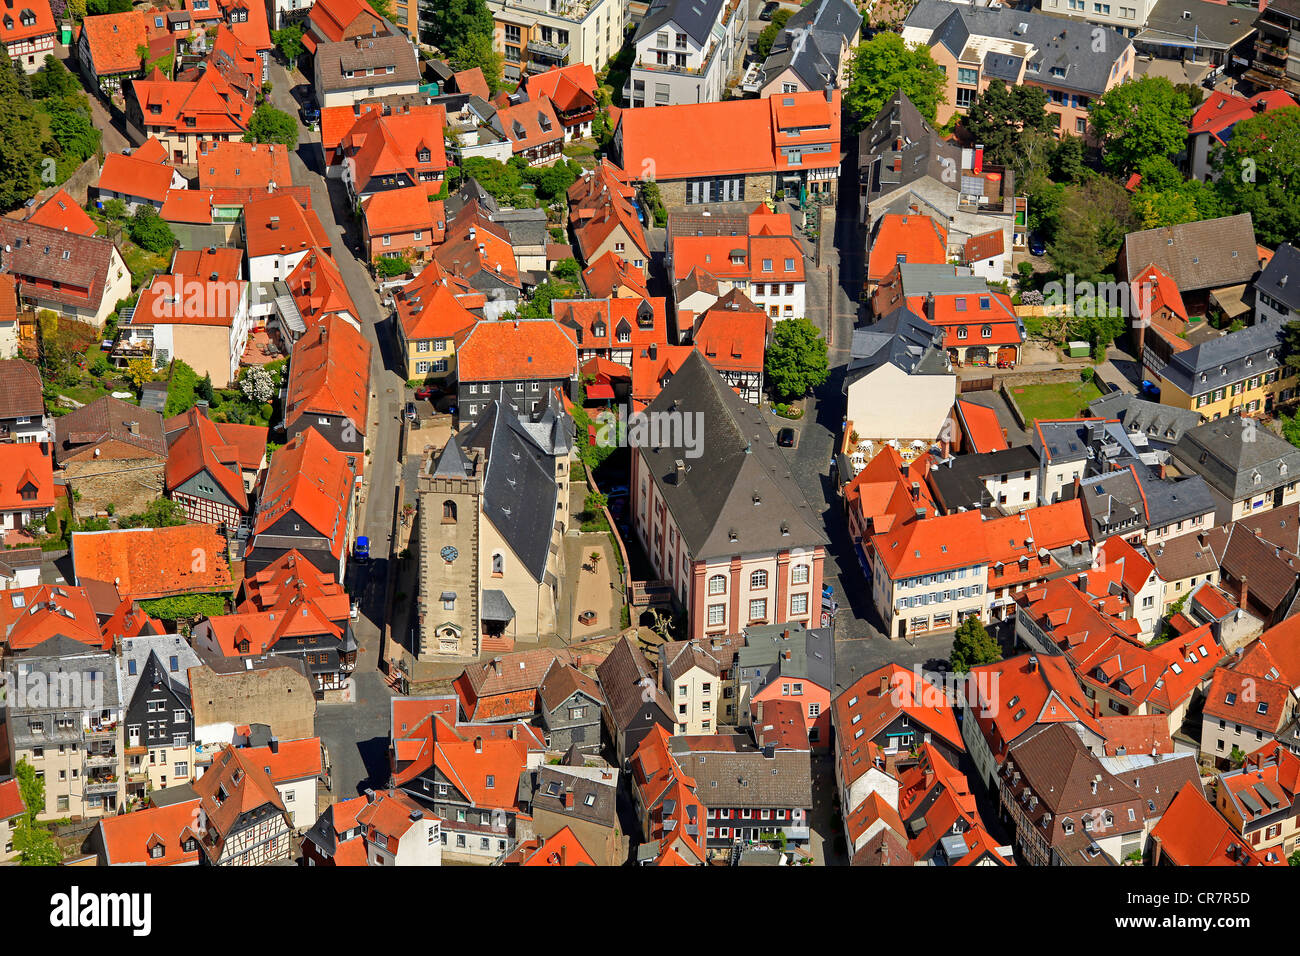 Vue aérienne, vieille ville, Kronberg im Taunus, Hesse, Germany, Europe Banque D'Images